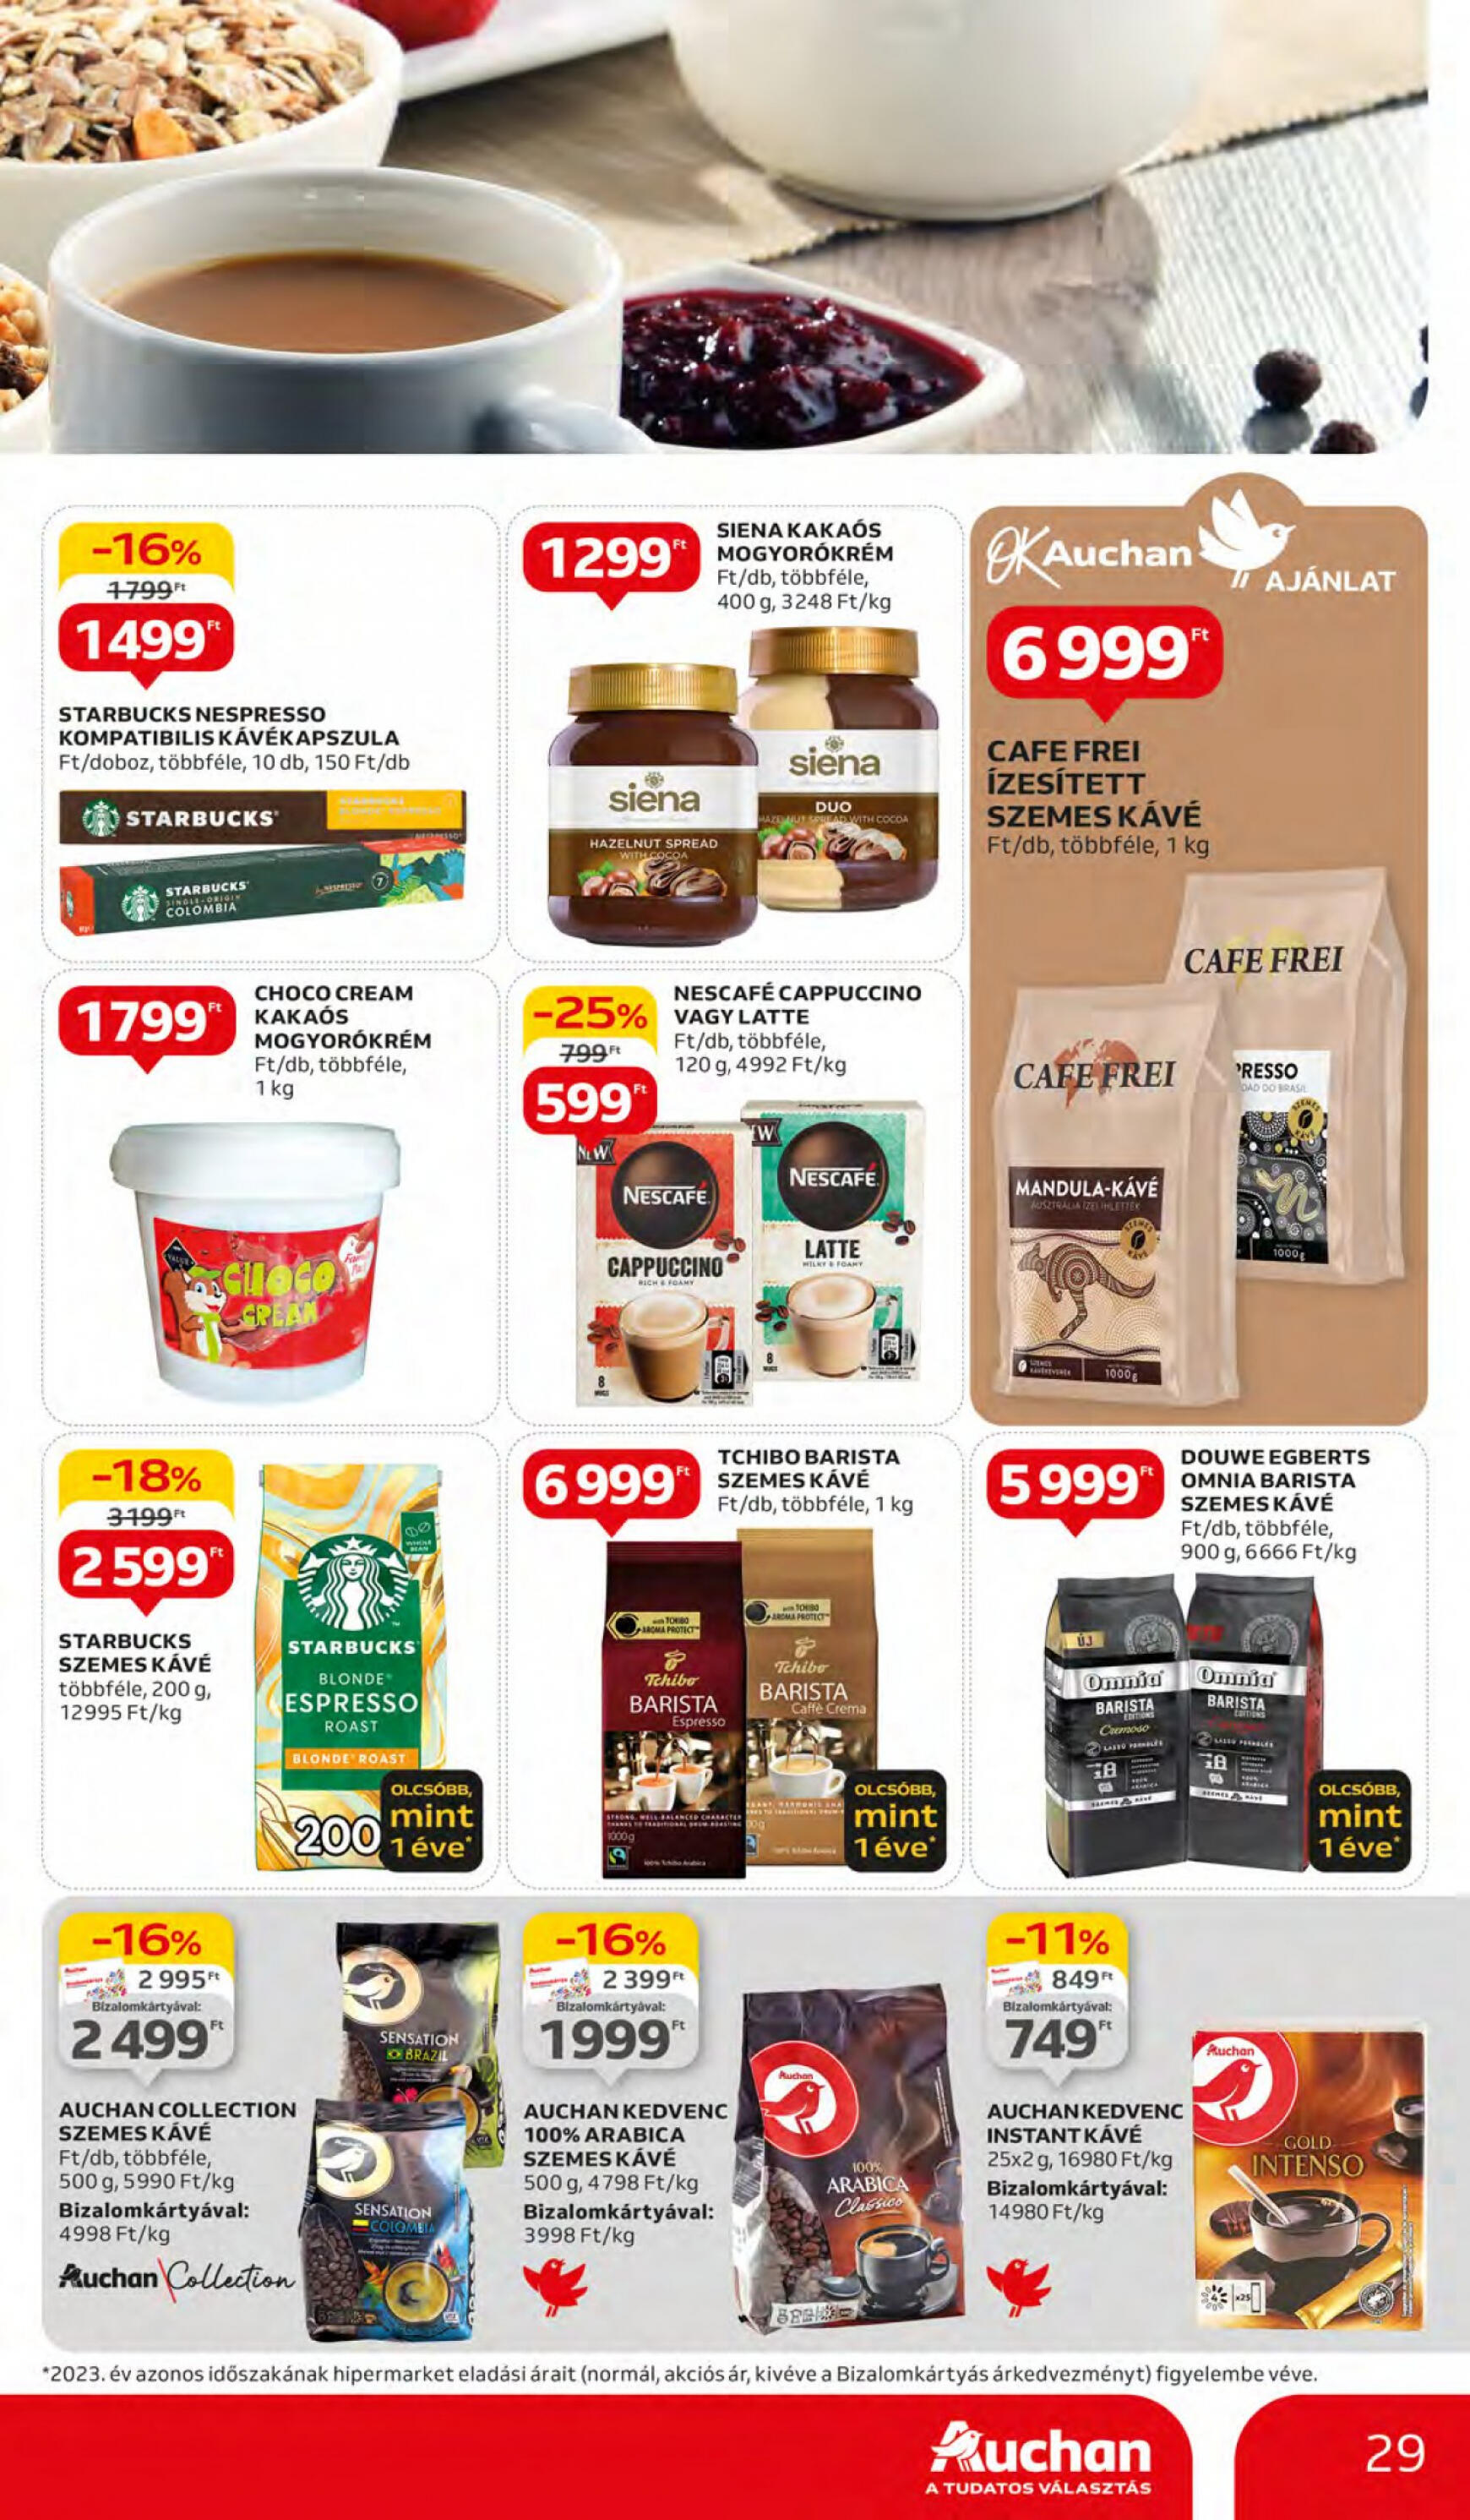 auchan - Aktuális újság Auchan 04.11. - 04.17. - page: 29